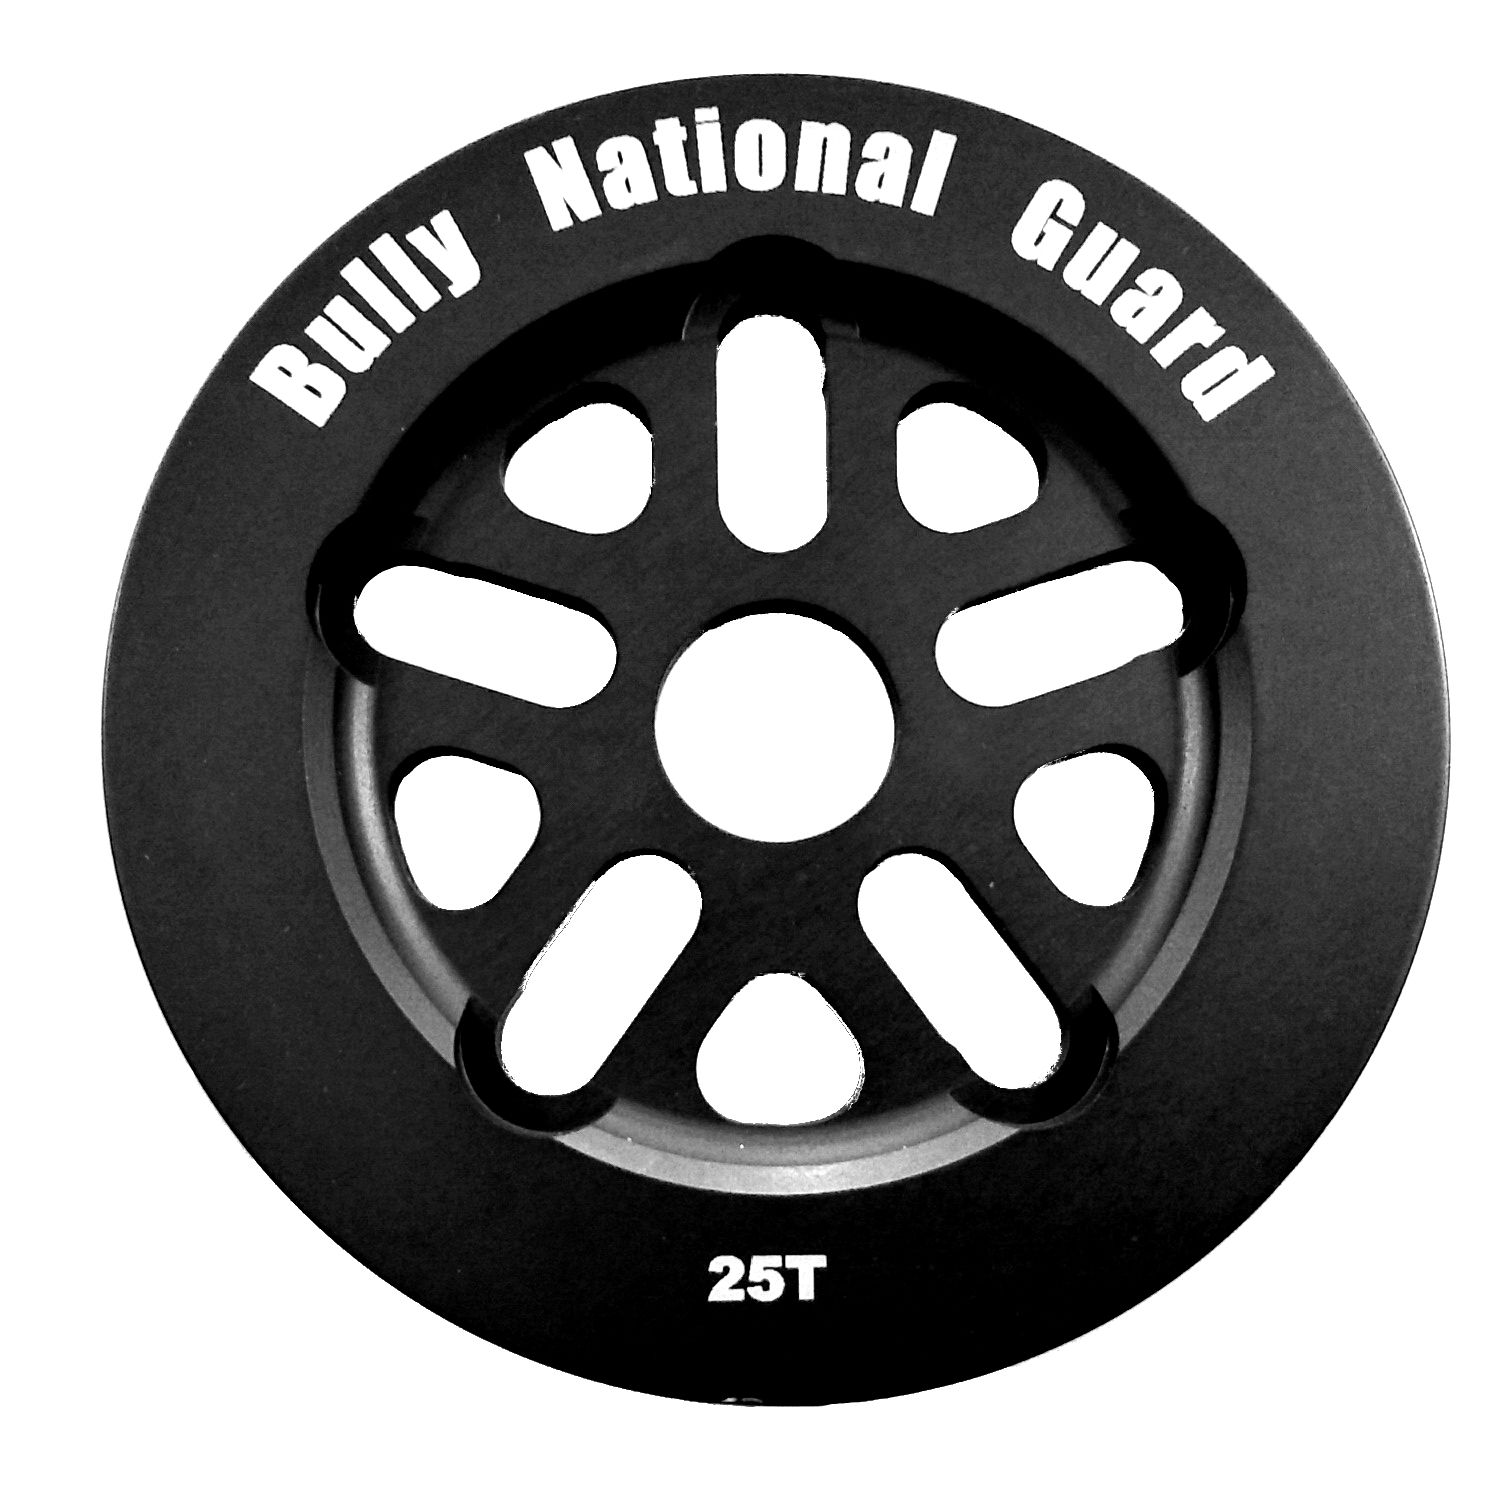 Bully National Guard 25t Sprocket Chainwheel - Black - USA Made